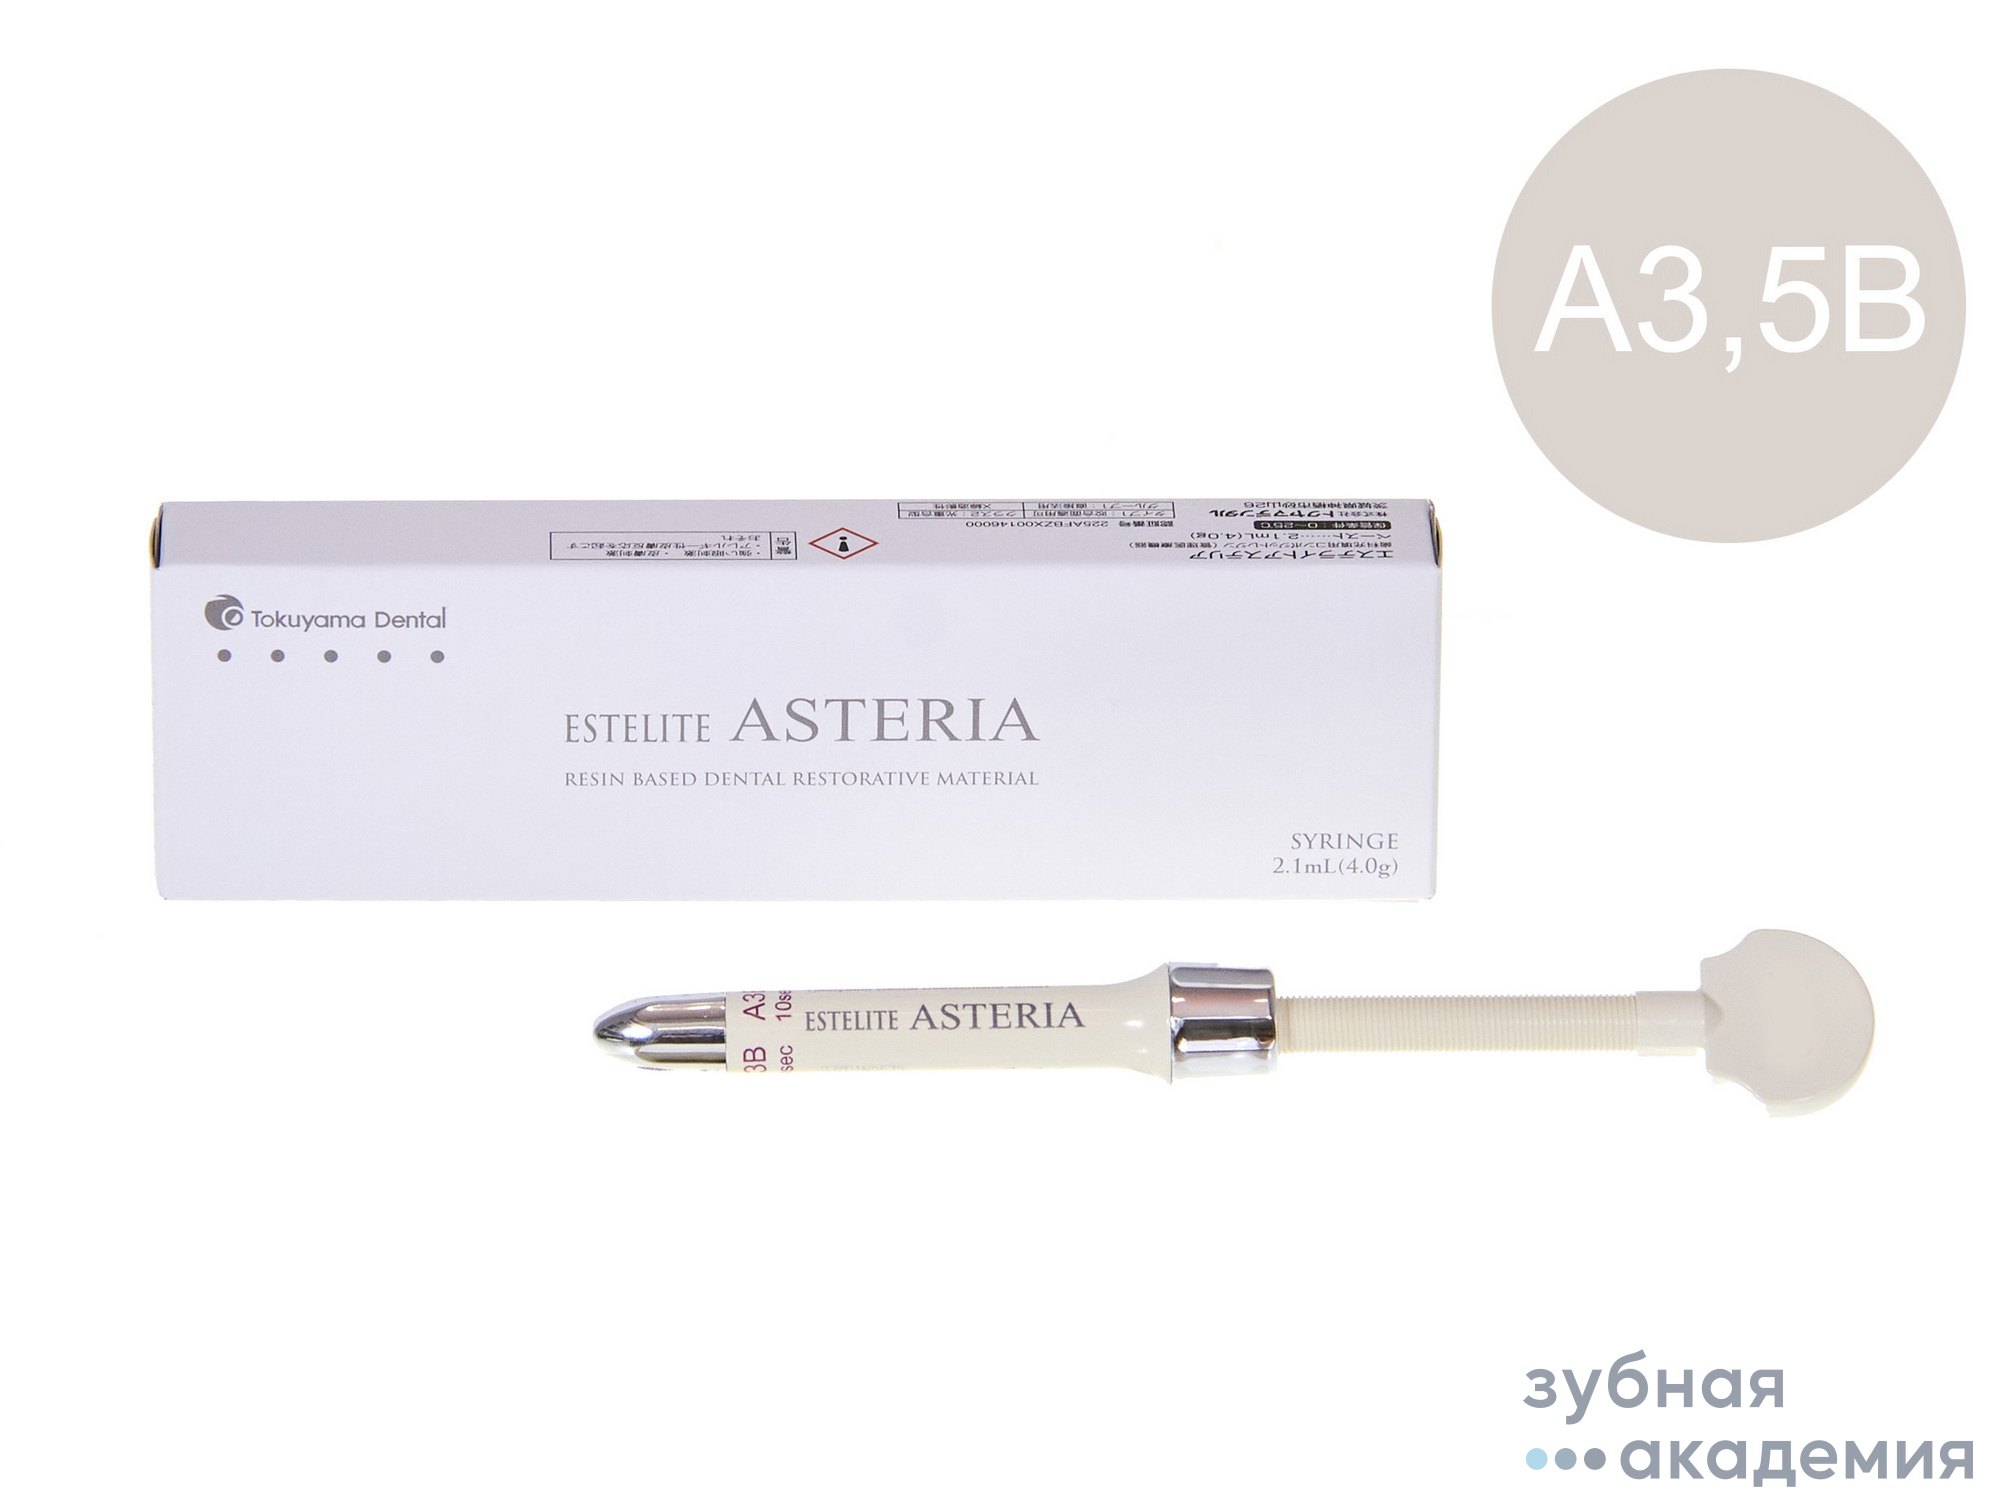 Estelite Asteria / Эстелайт Астерия A3,5B (4 г) Tokuyama Dental/ Япония